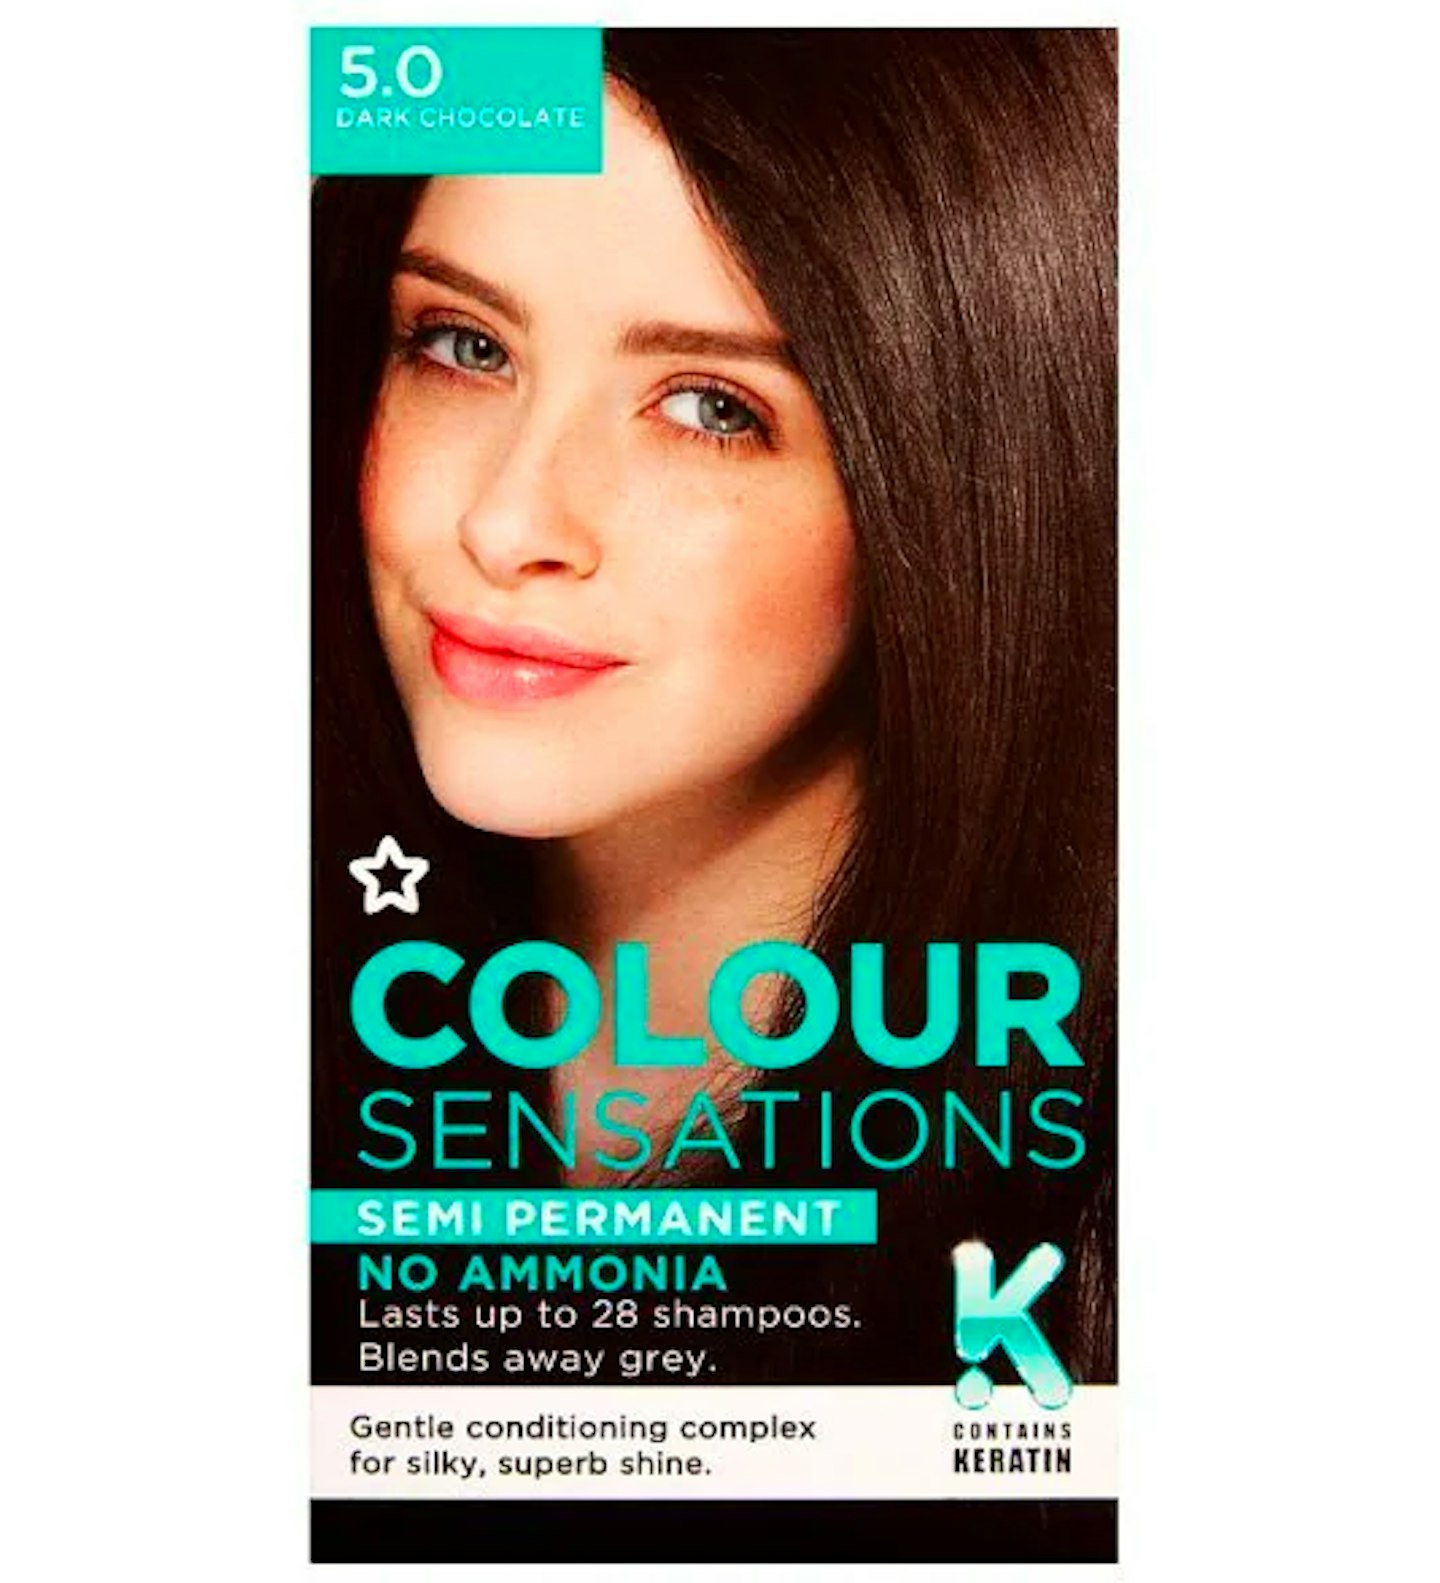 Colour Sensations Semi Permanent Hair Dye Dark Chocolate 5.0